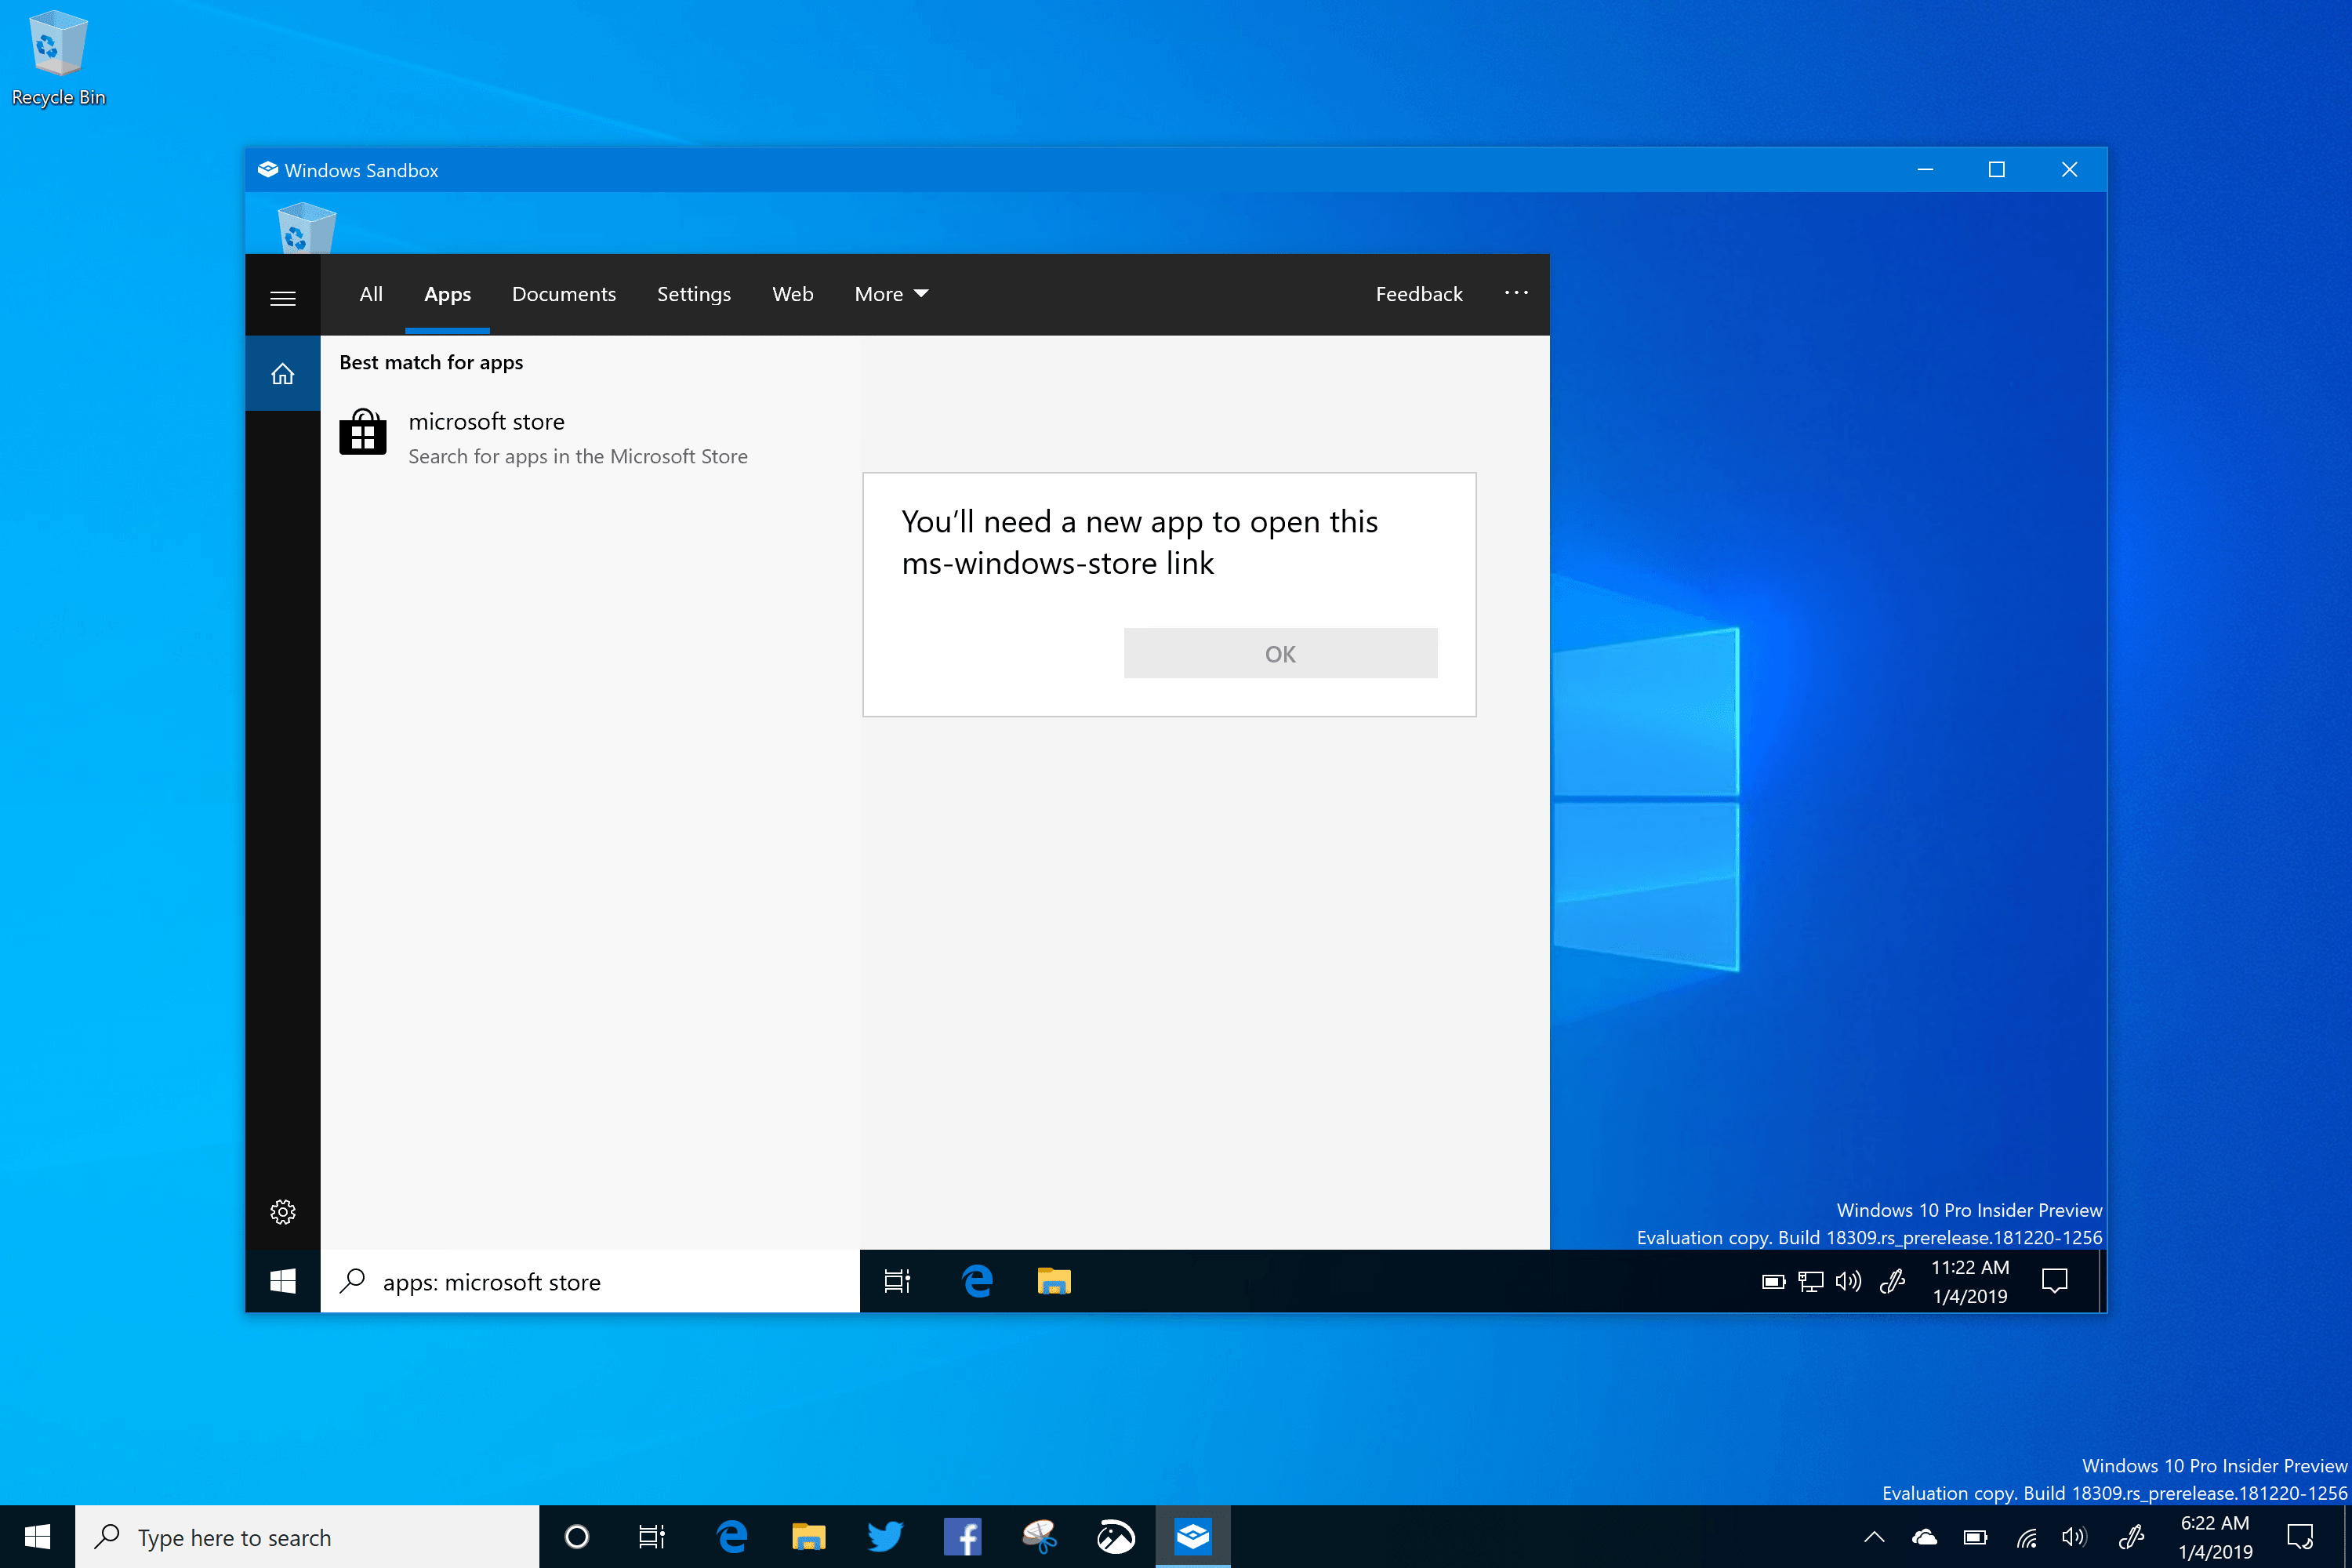 Windows Sandbox - Windows 10 (19H1) Build 18309